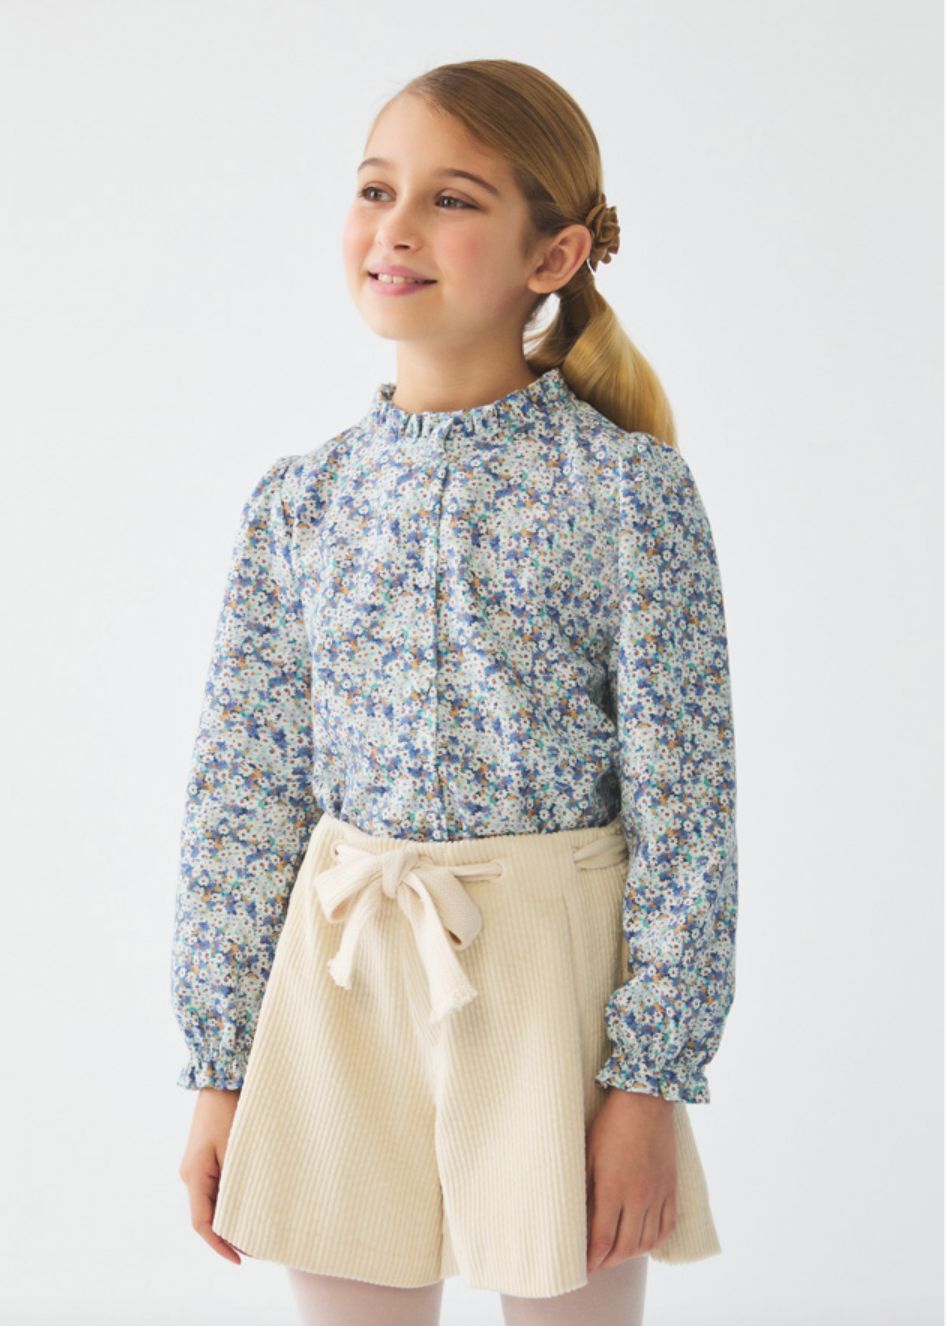 Printed blouse 5641 Blue Floral